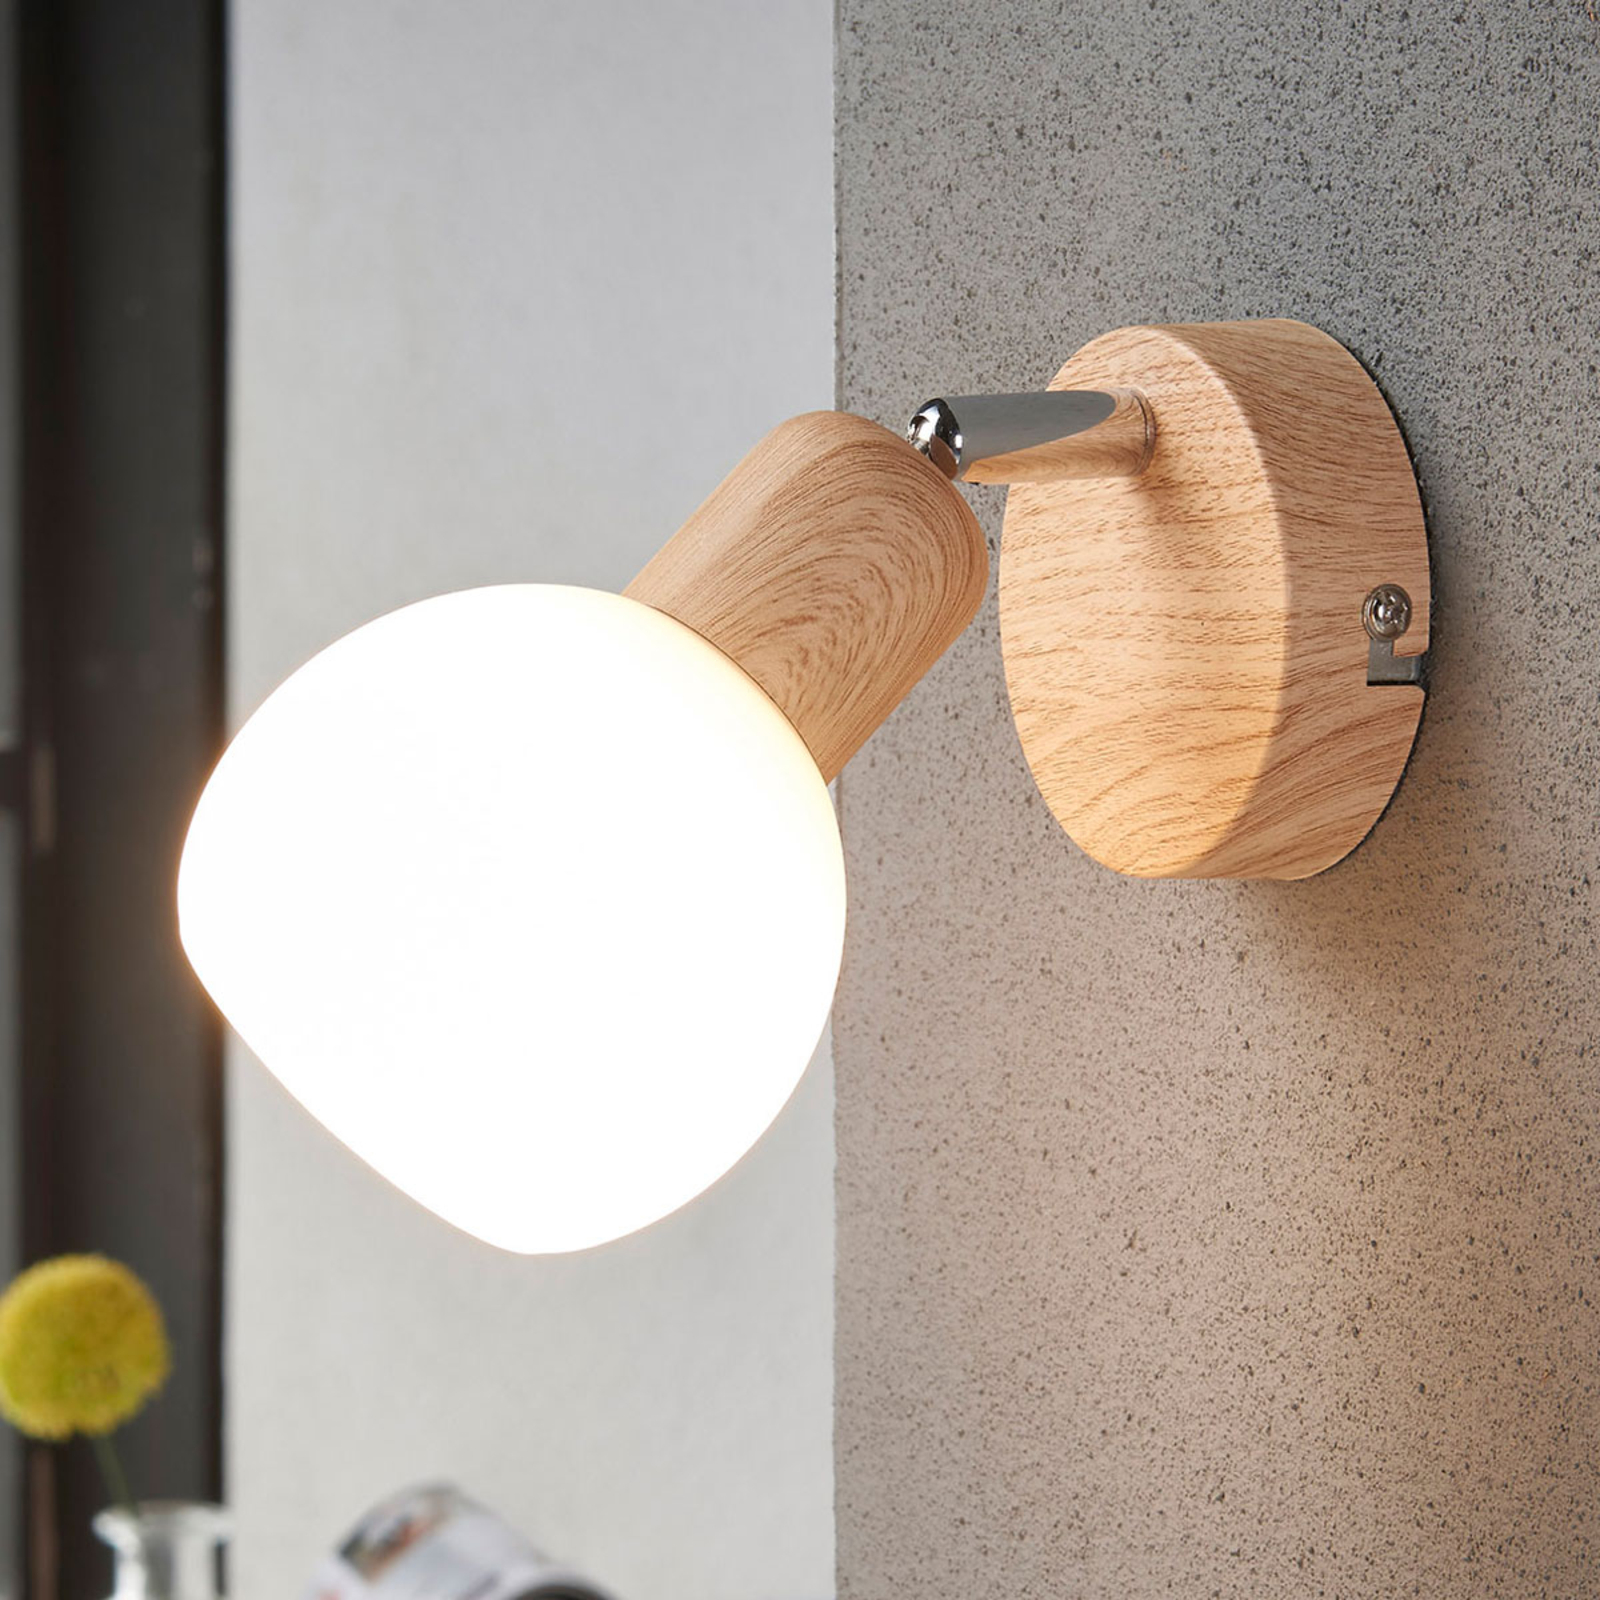 Gradevole spot LED Svenka, monolampada look legno